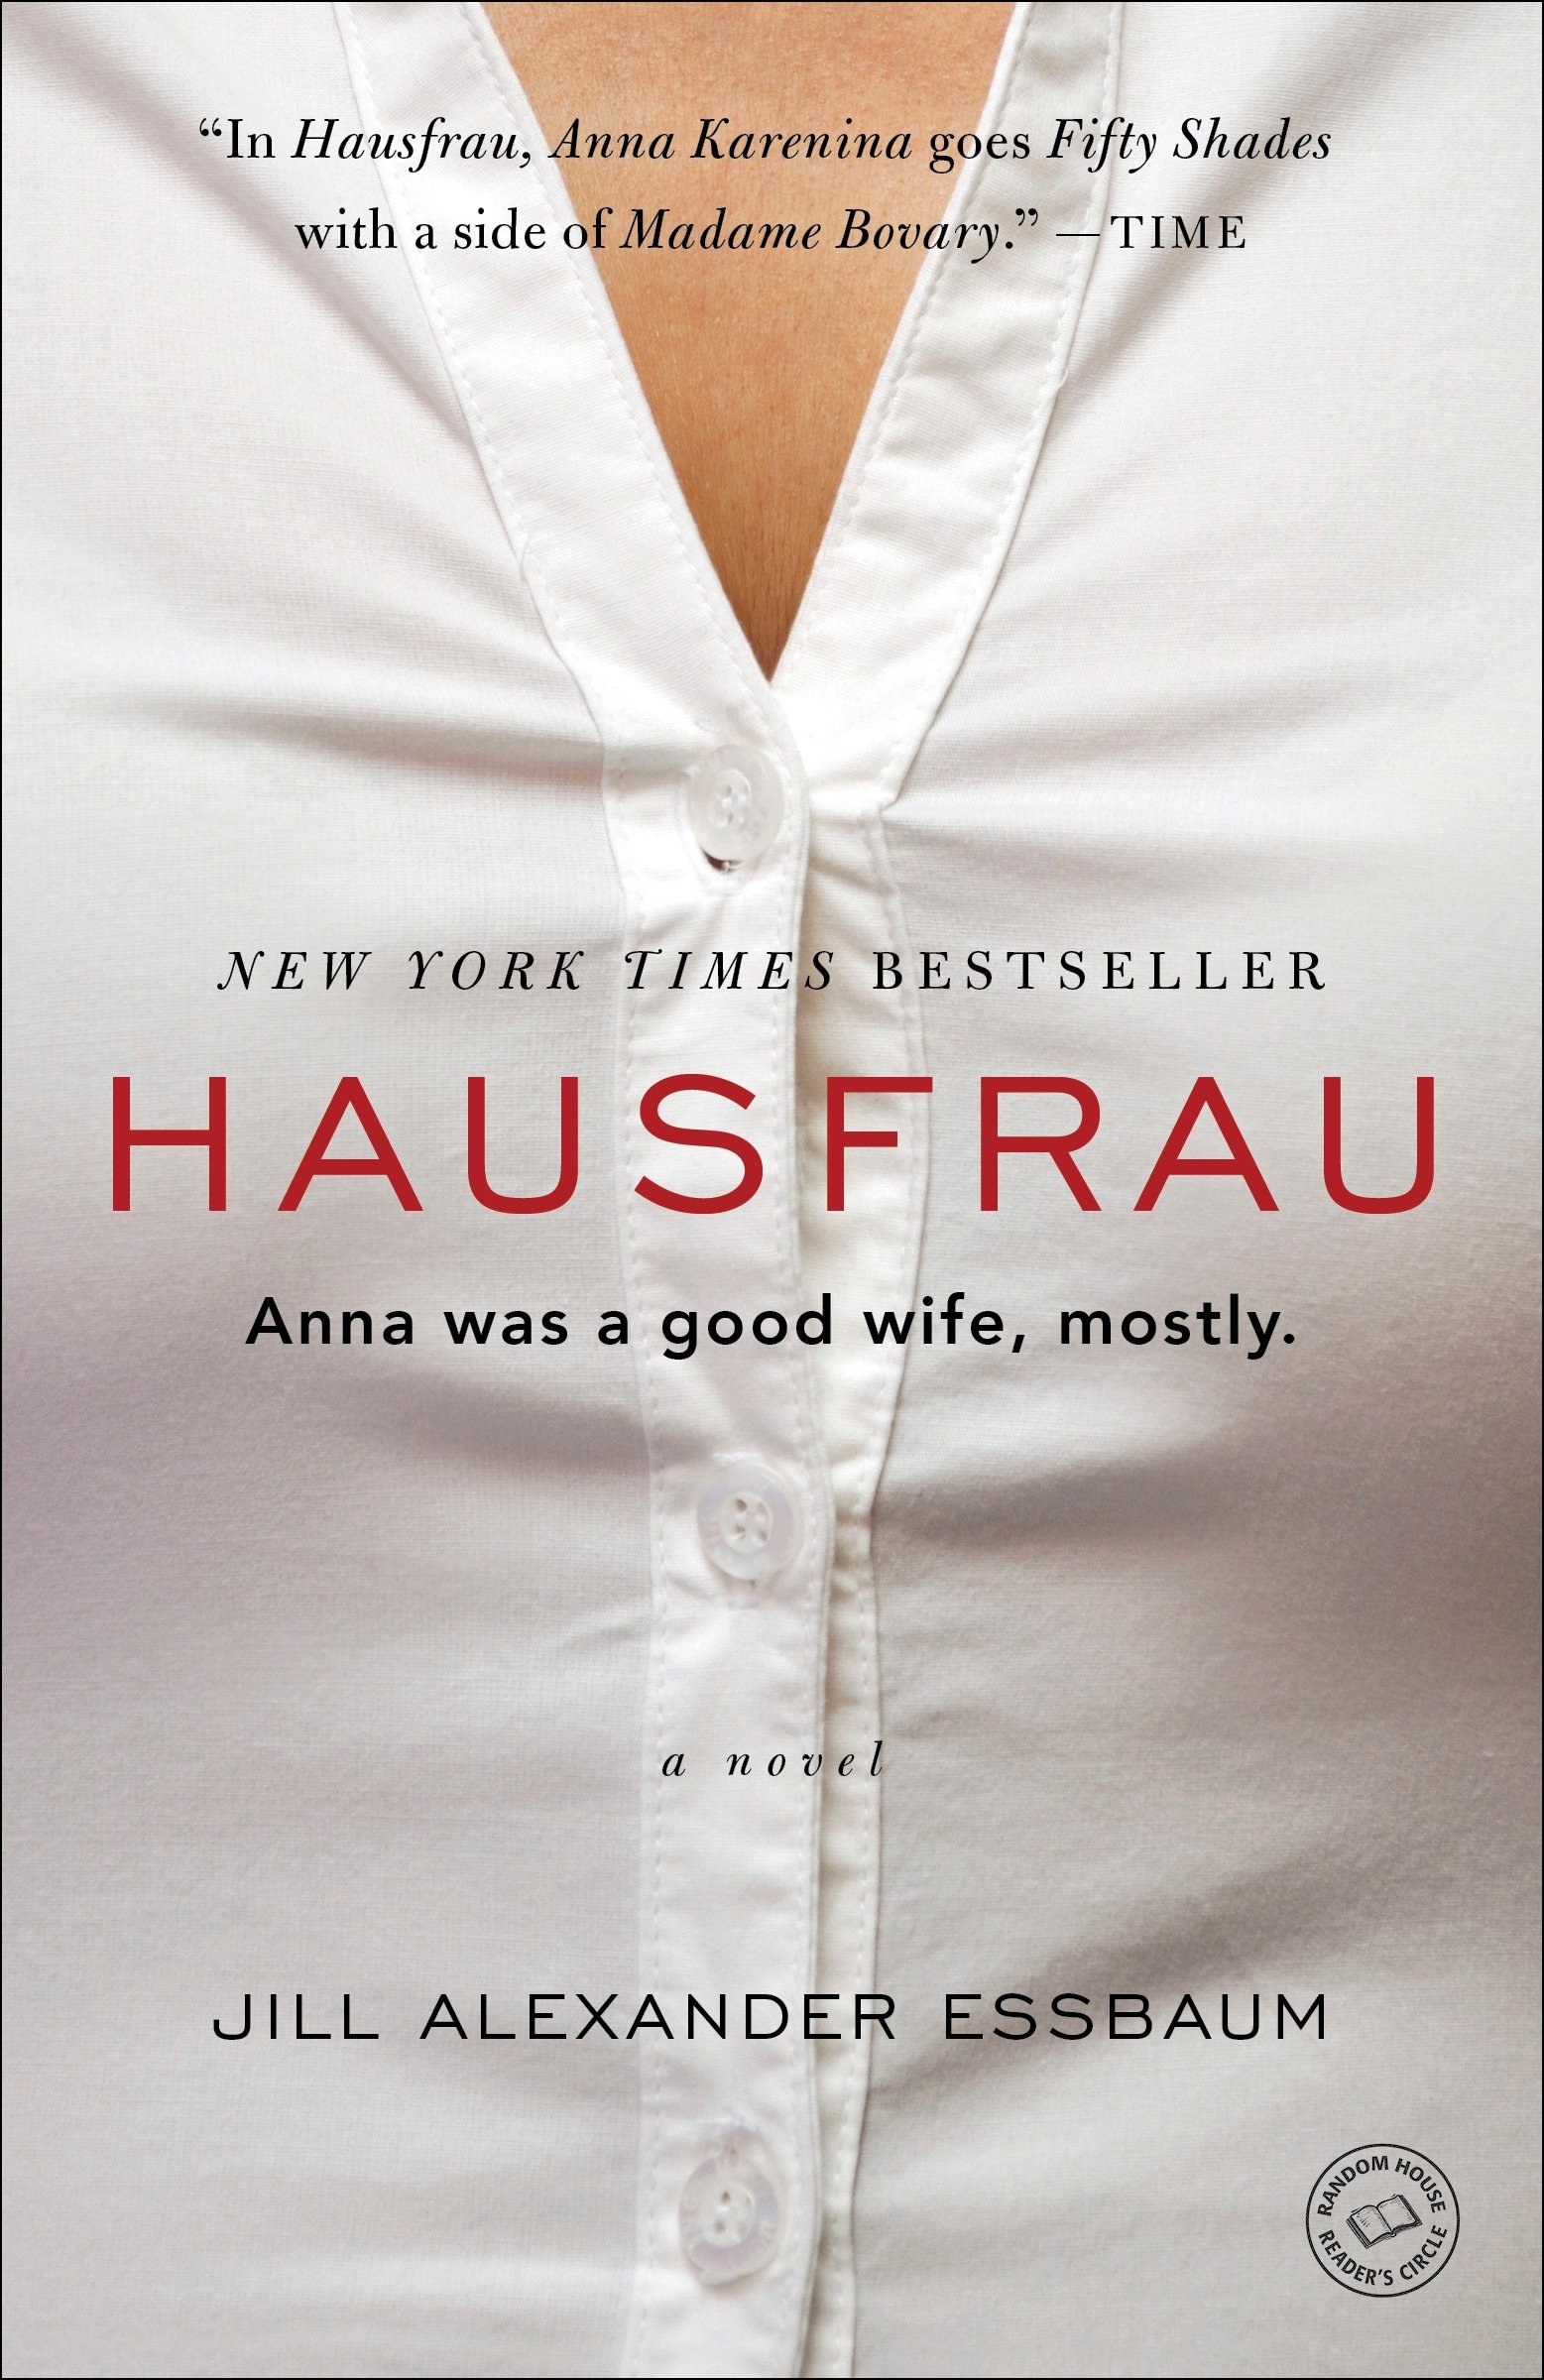 Hausfrau cover image